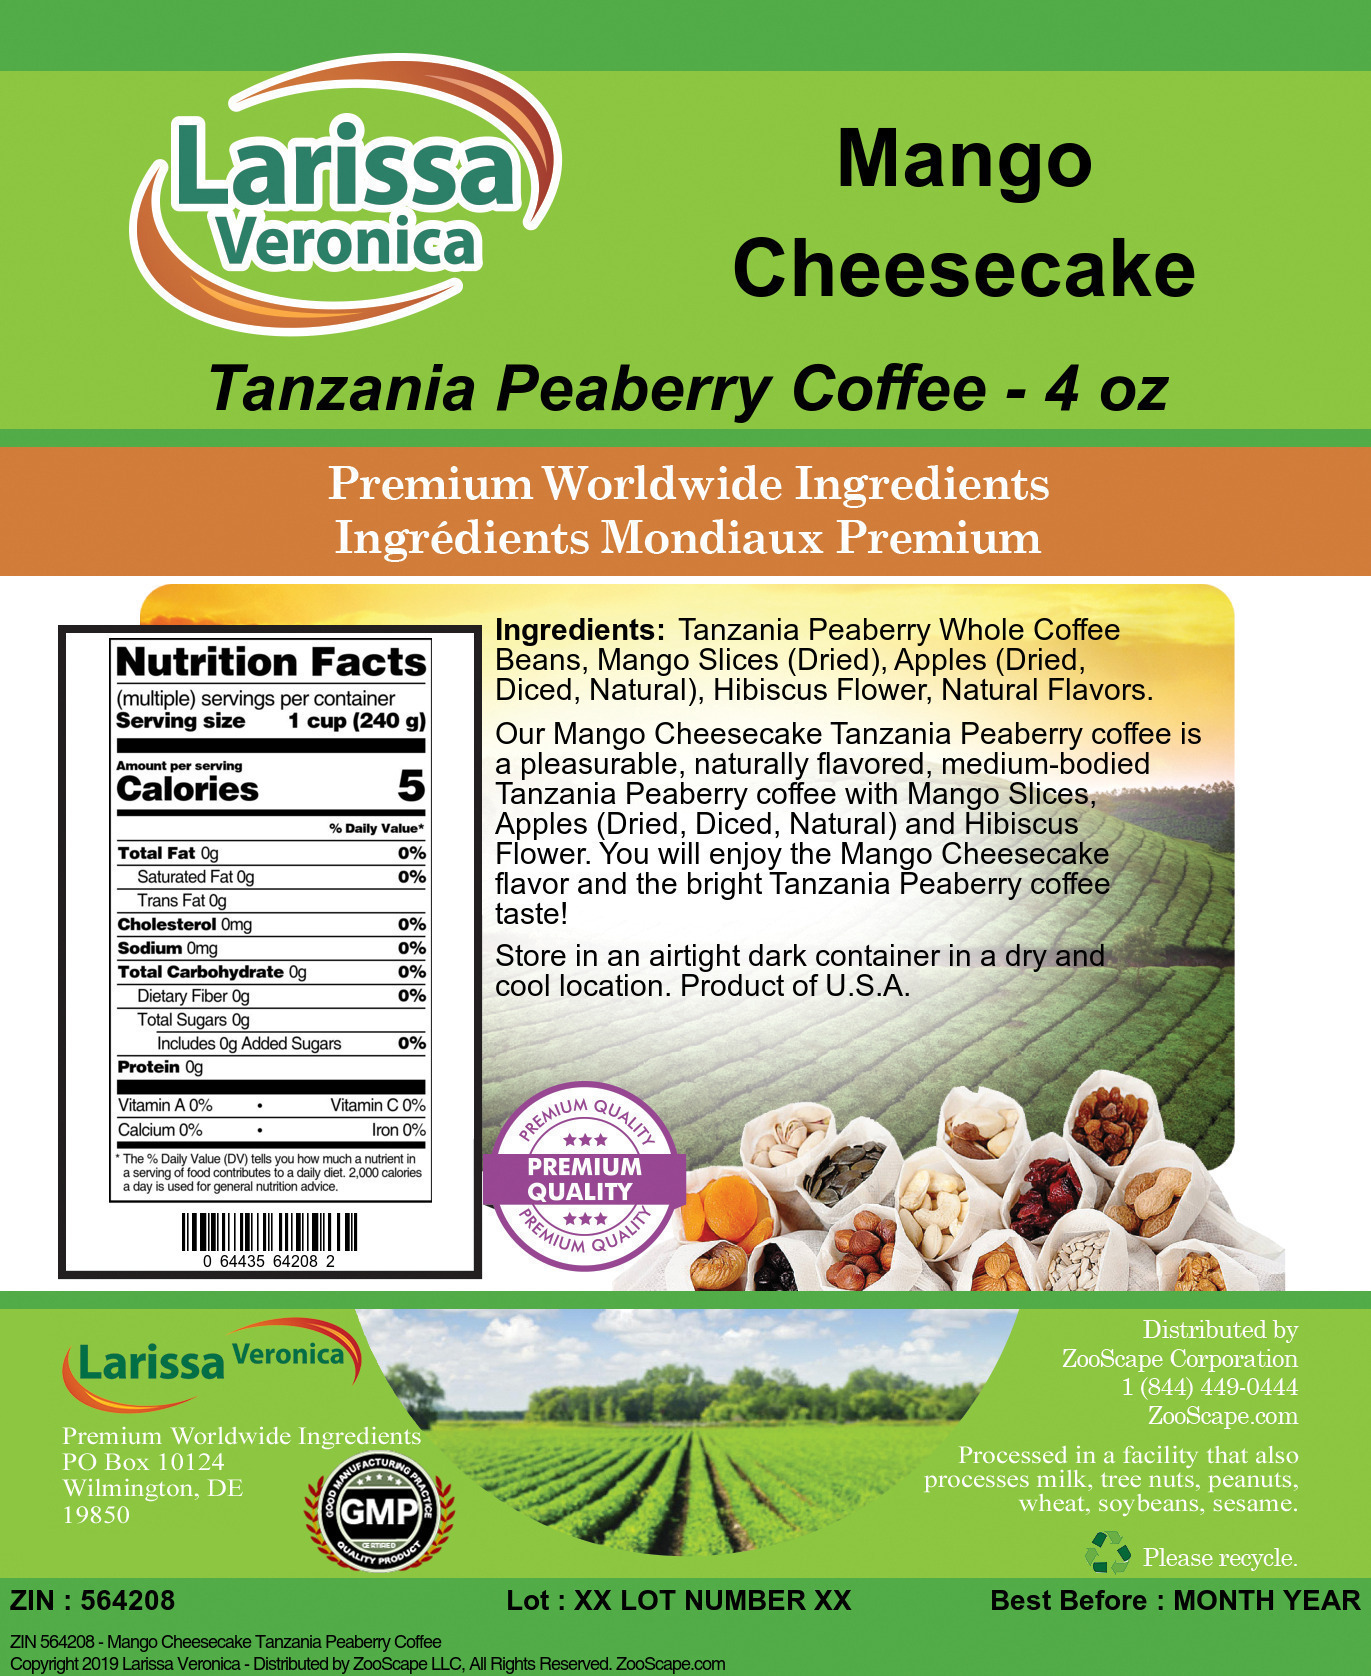 Mango Cheesecake Tanzania Peaberry Coffee - Label